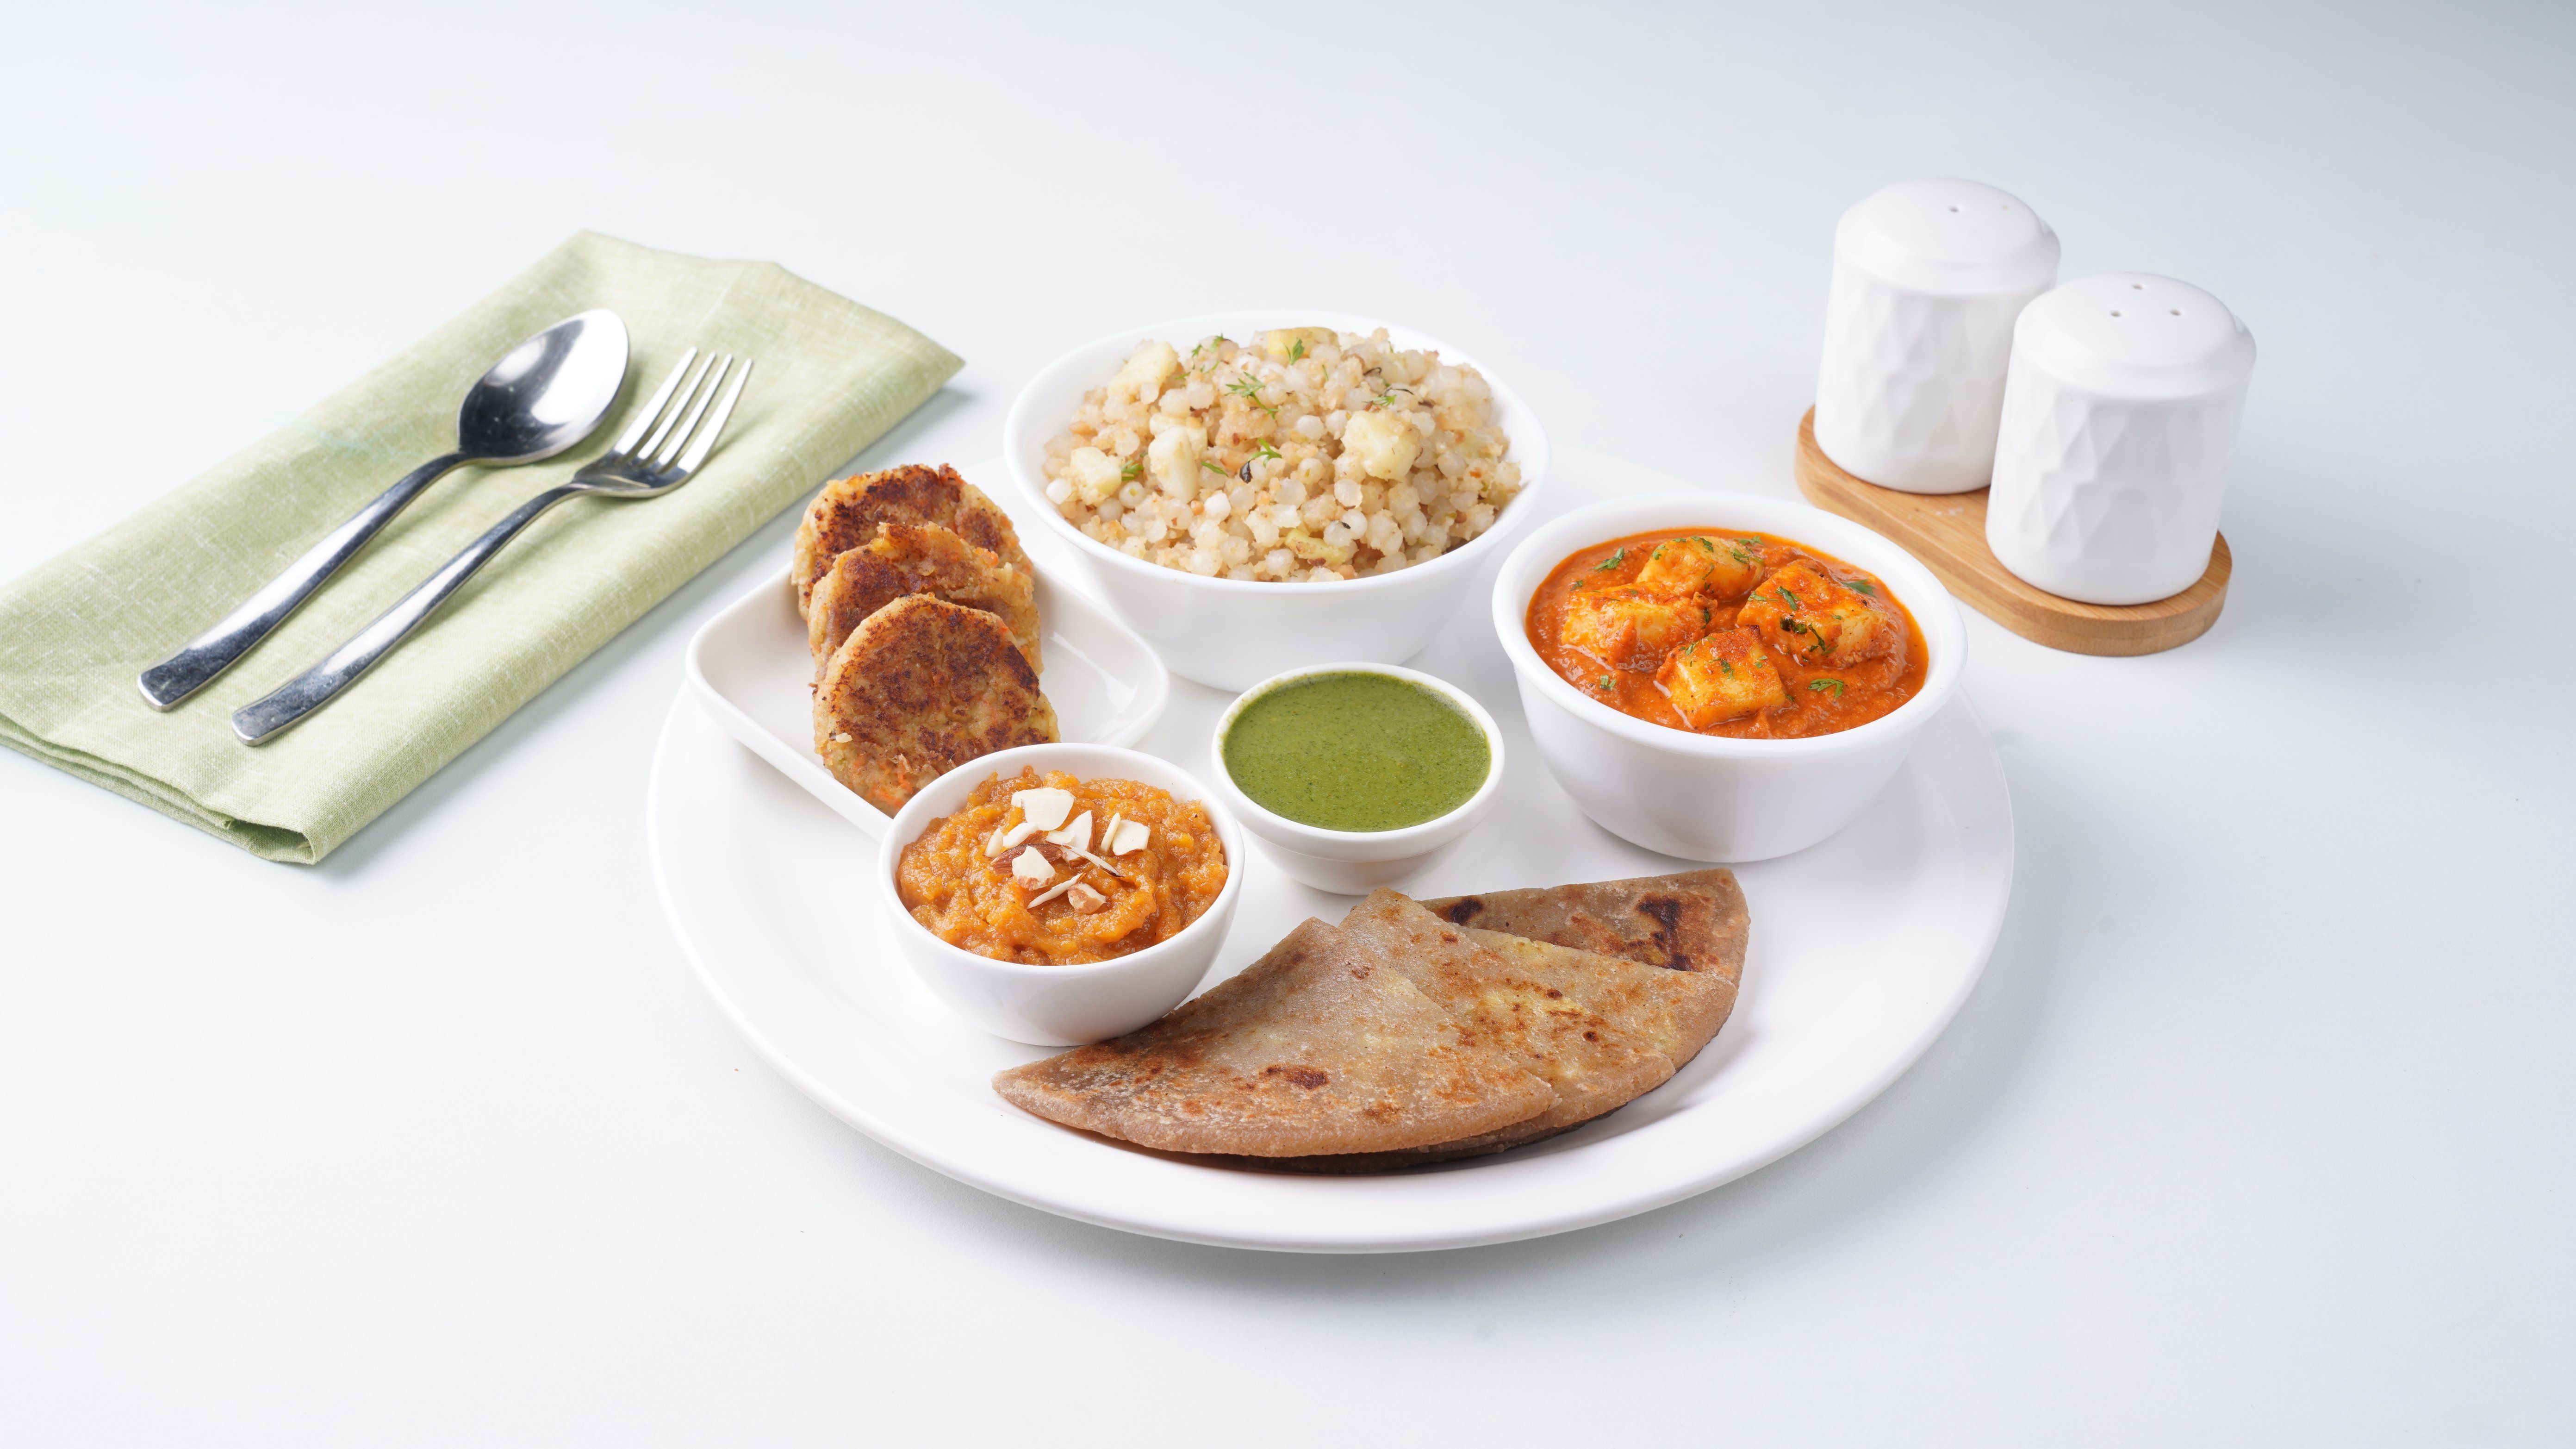 Pure Veg Meals by Lunchbox in Sadar, Nagpur